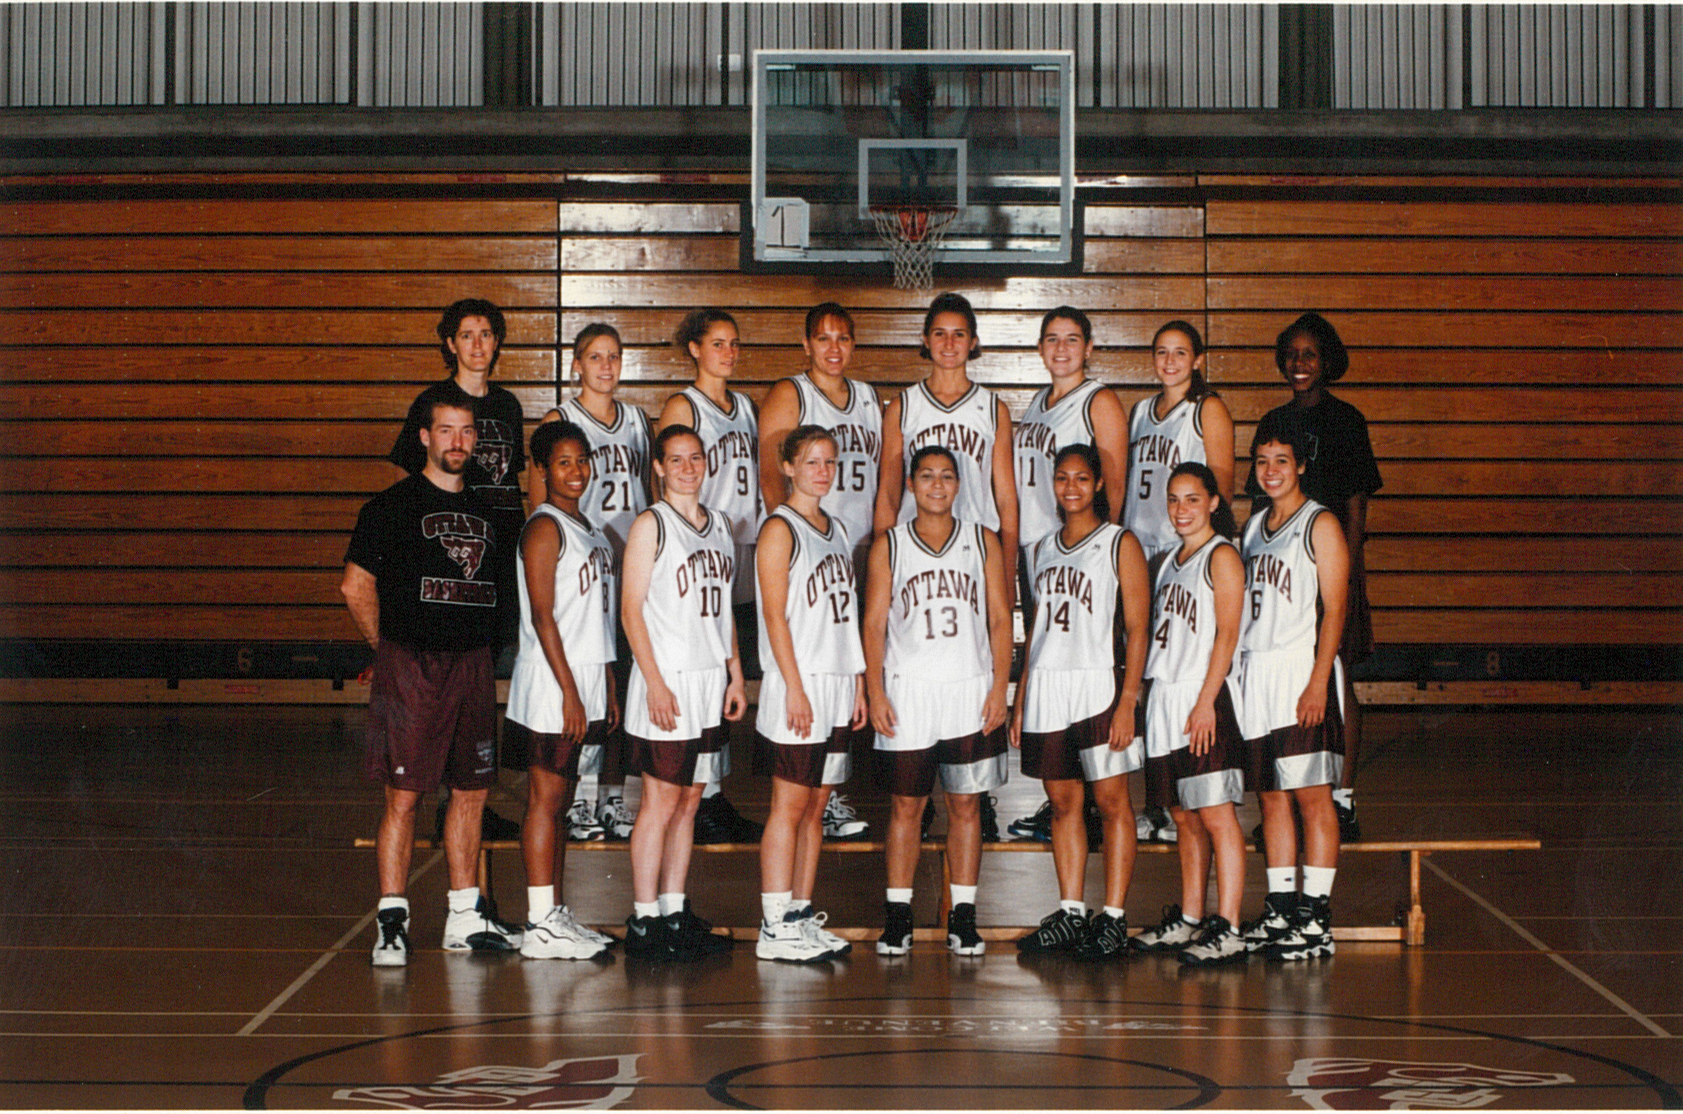 Team photo of women's basketball taken in front of wooden bleachers.